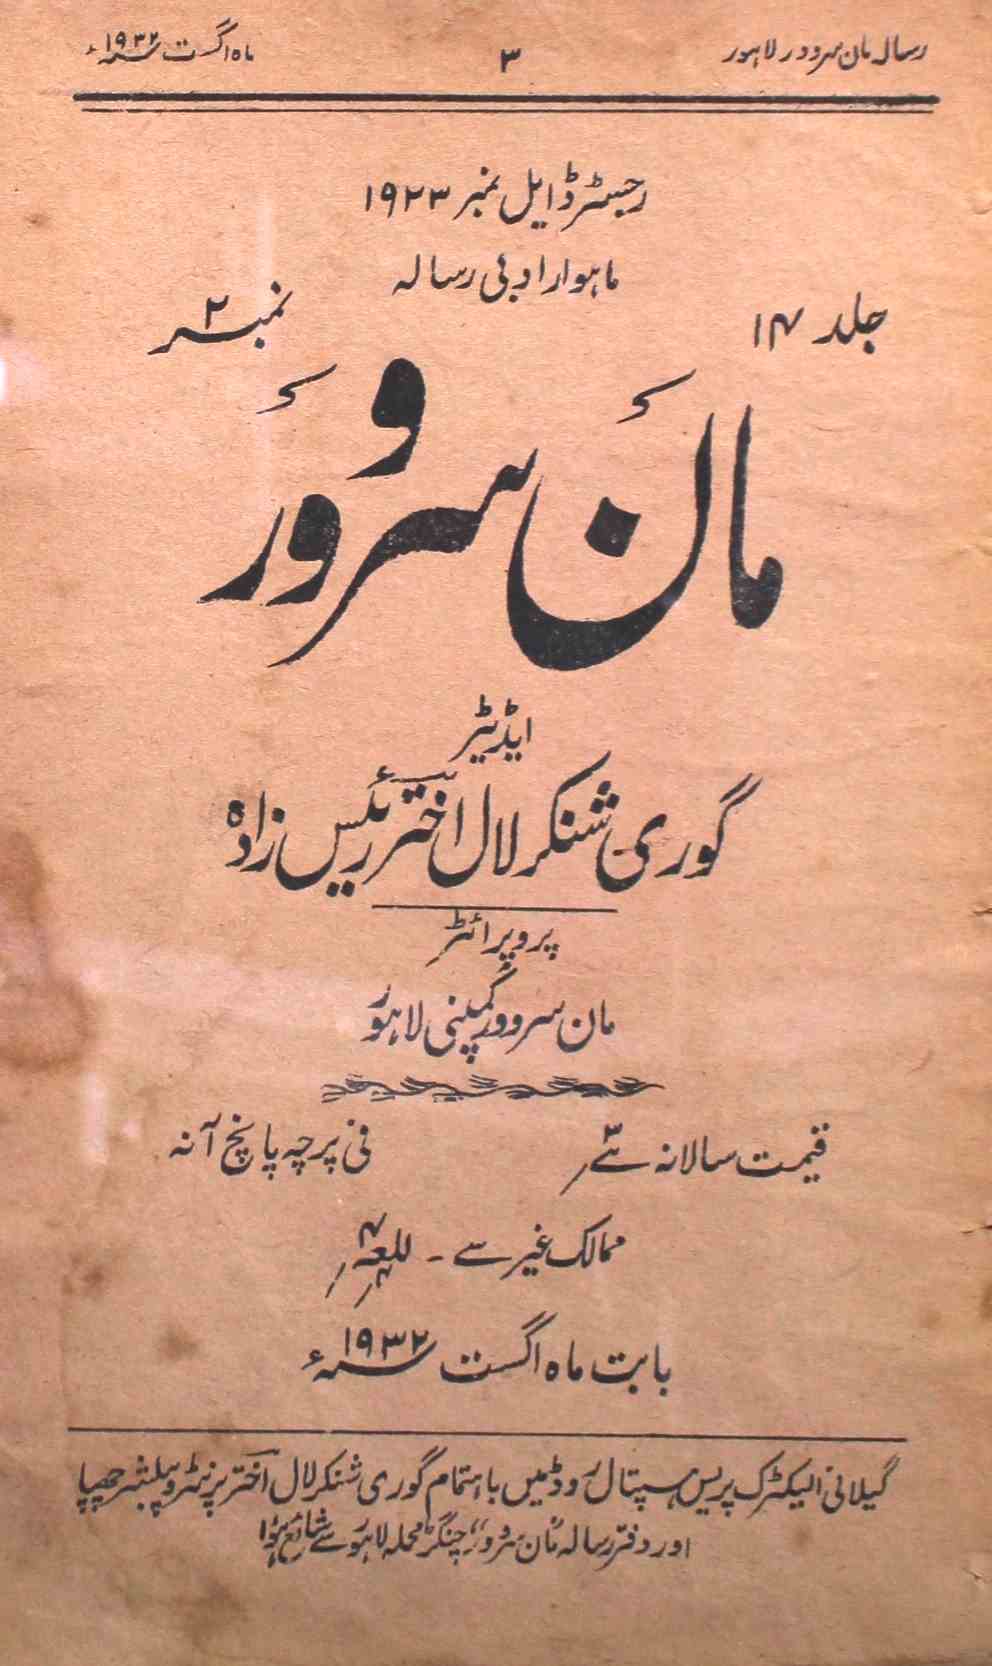 Maan Sarover Jild 14 No 2 August 1932-SVK-Shumara Number-002